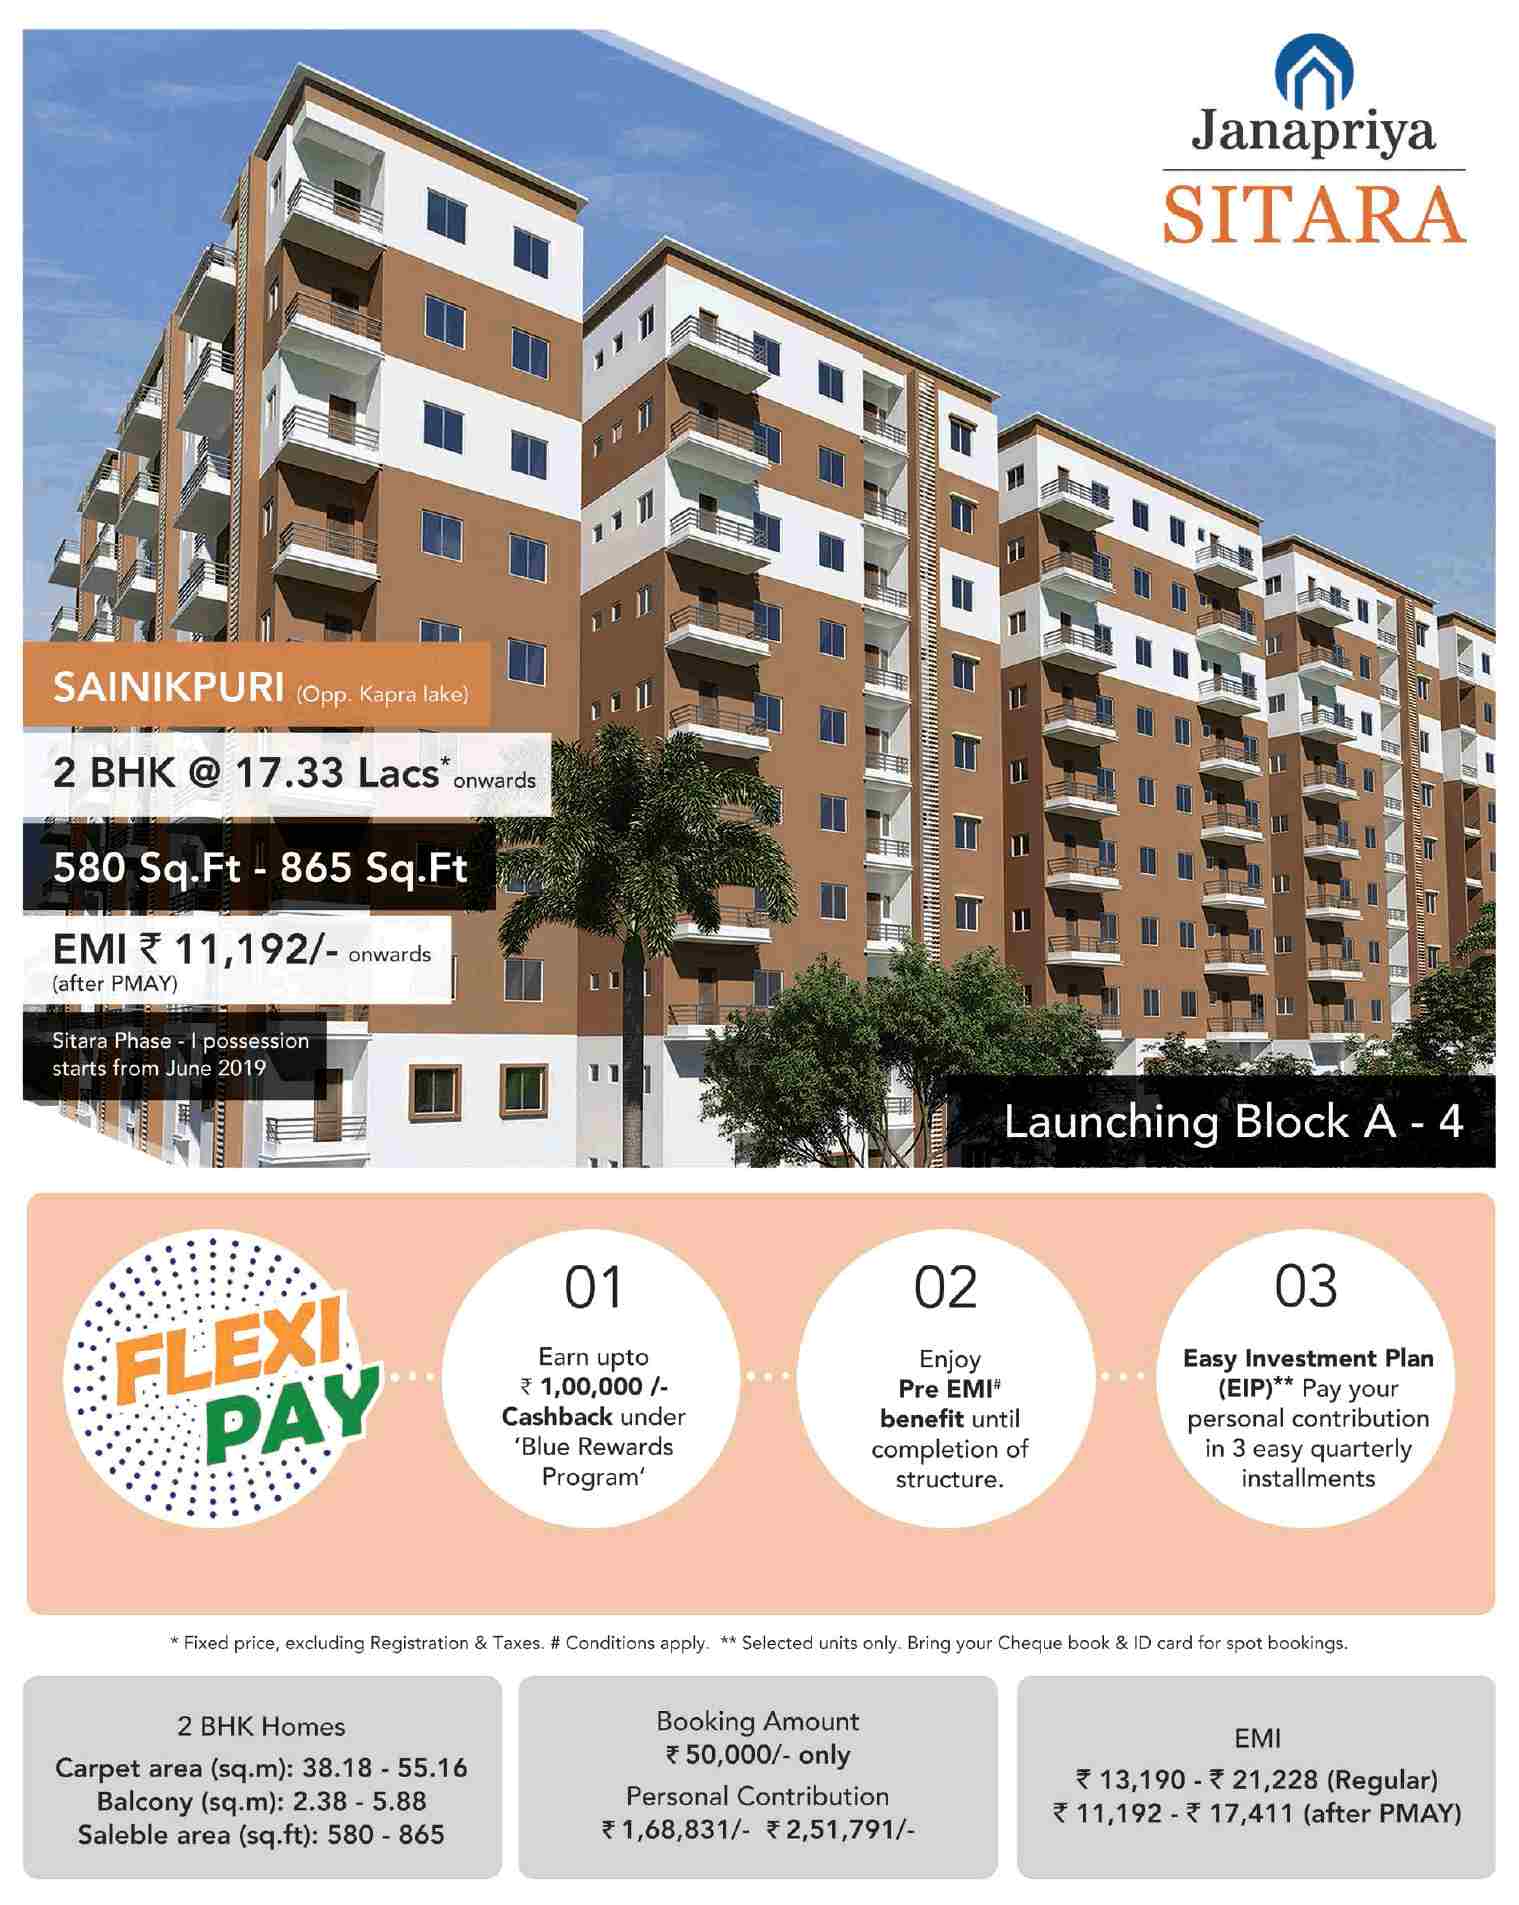 Avail the flexi pay offer at Janapriya Sitara in Sainikpuri, Hyderabad